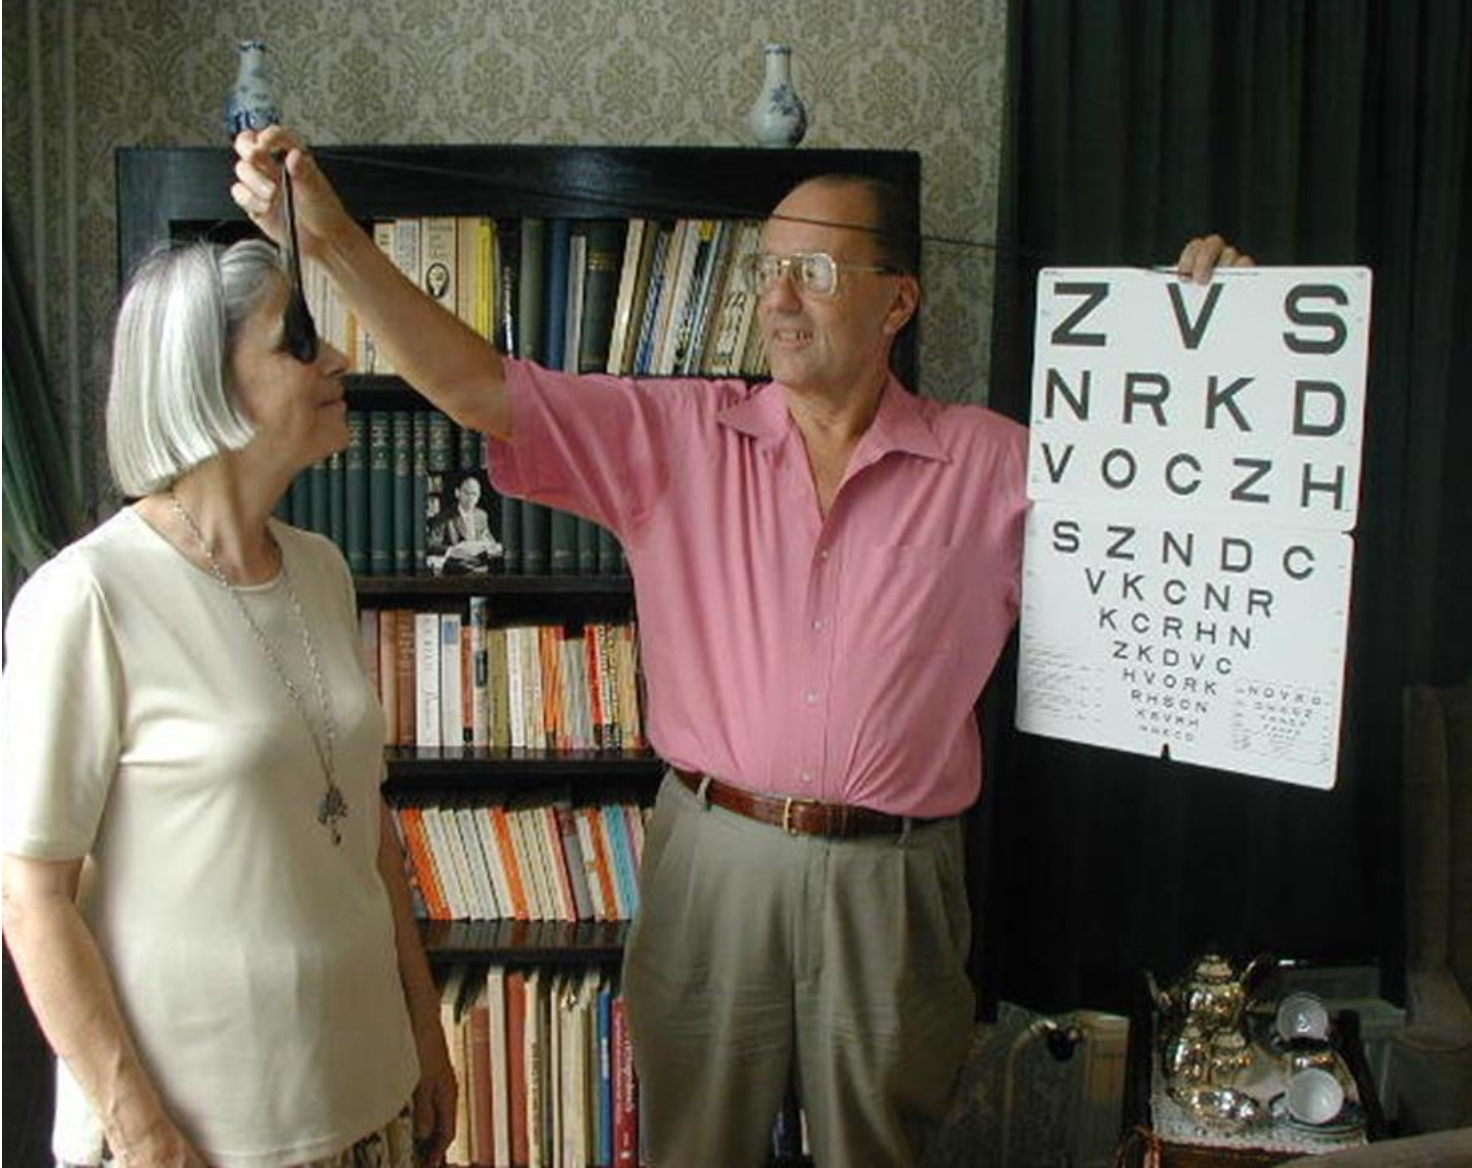 Dr. Colenbrander demonstrating his 1-Meter letter chart on his sister Jetteke.